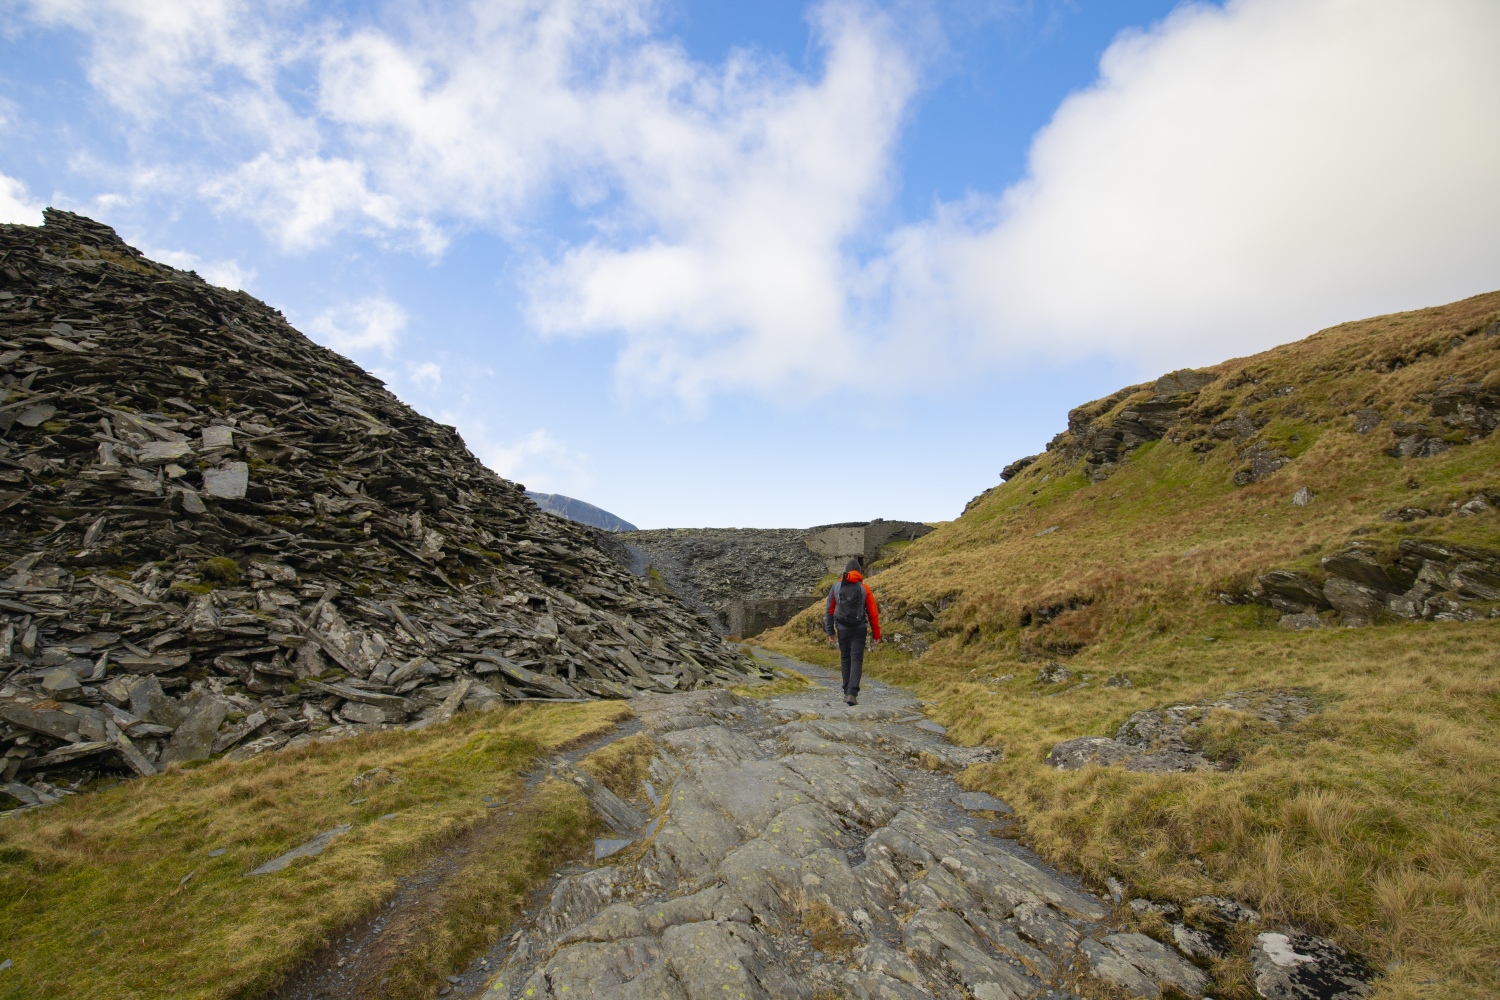 Person walking along rocky path, Snowdonia Slate Trail